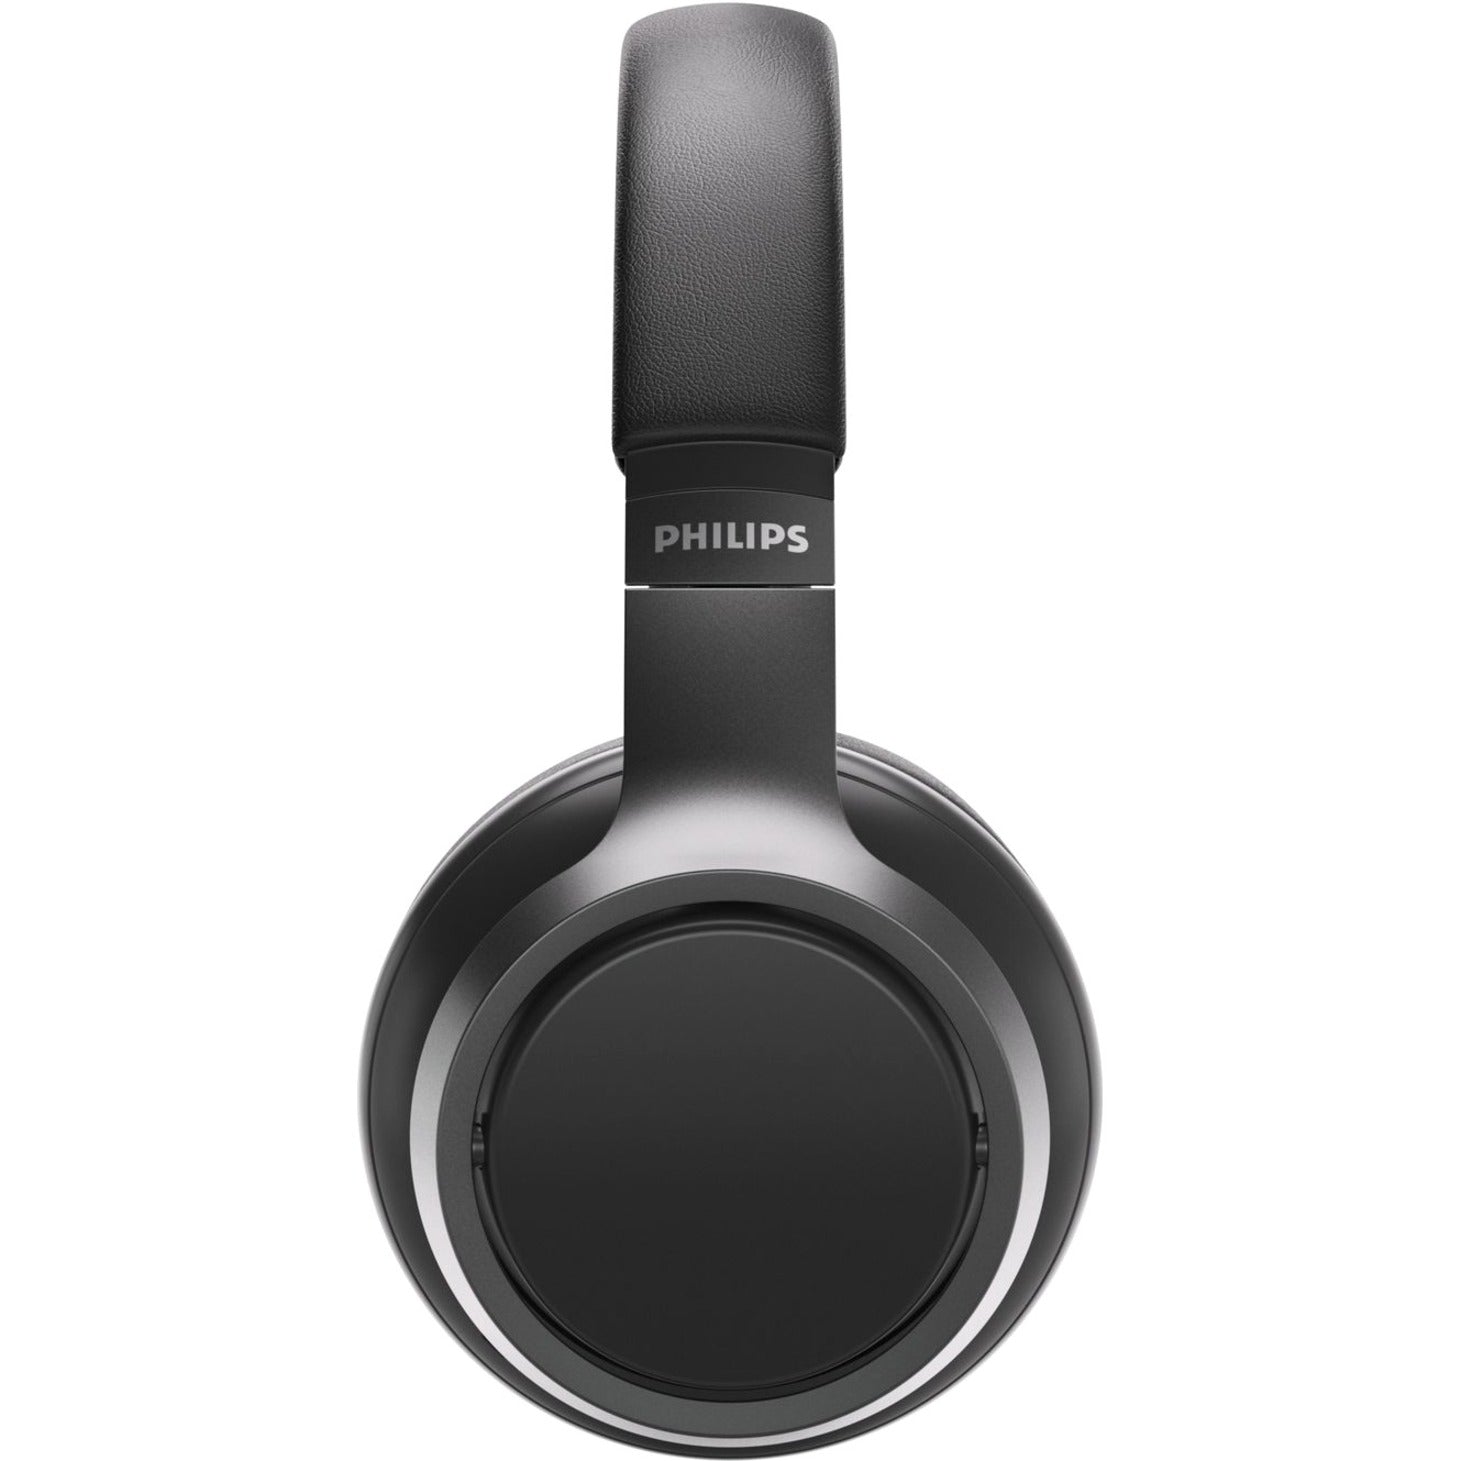 Philips TAH9505BK/00 Over-Ear Wireless Headphones, Bluetooth, Noise Canceling, Deep Bass